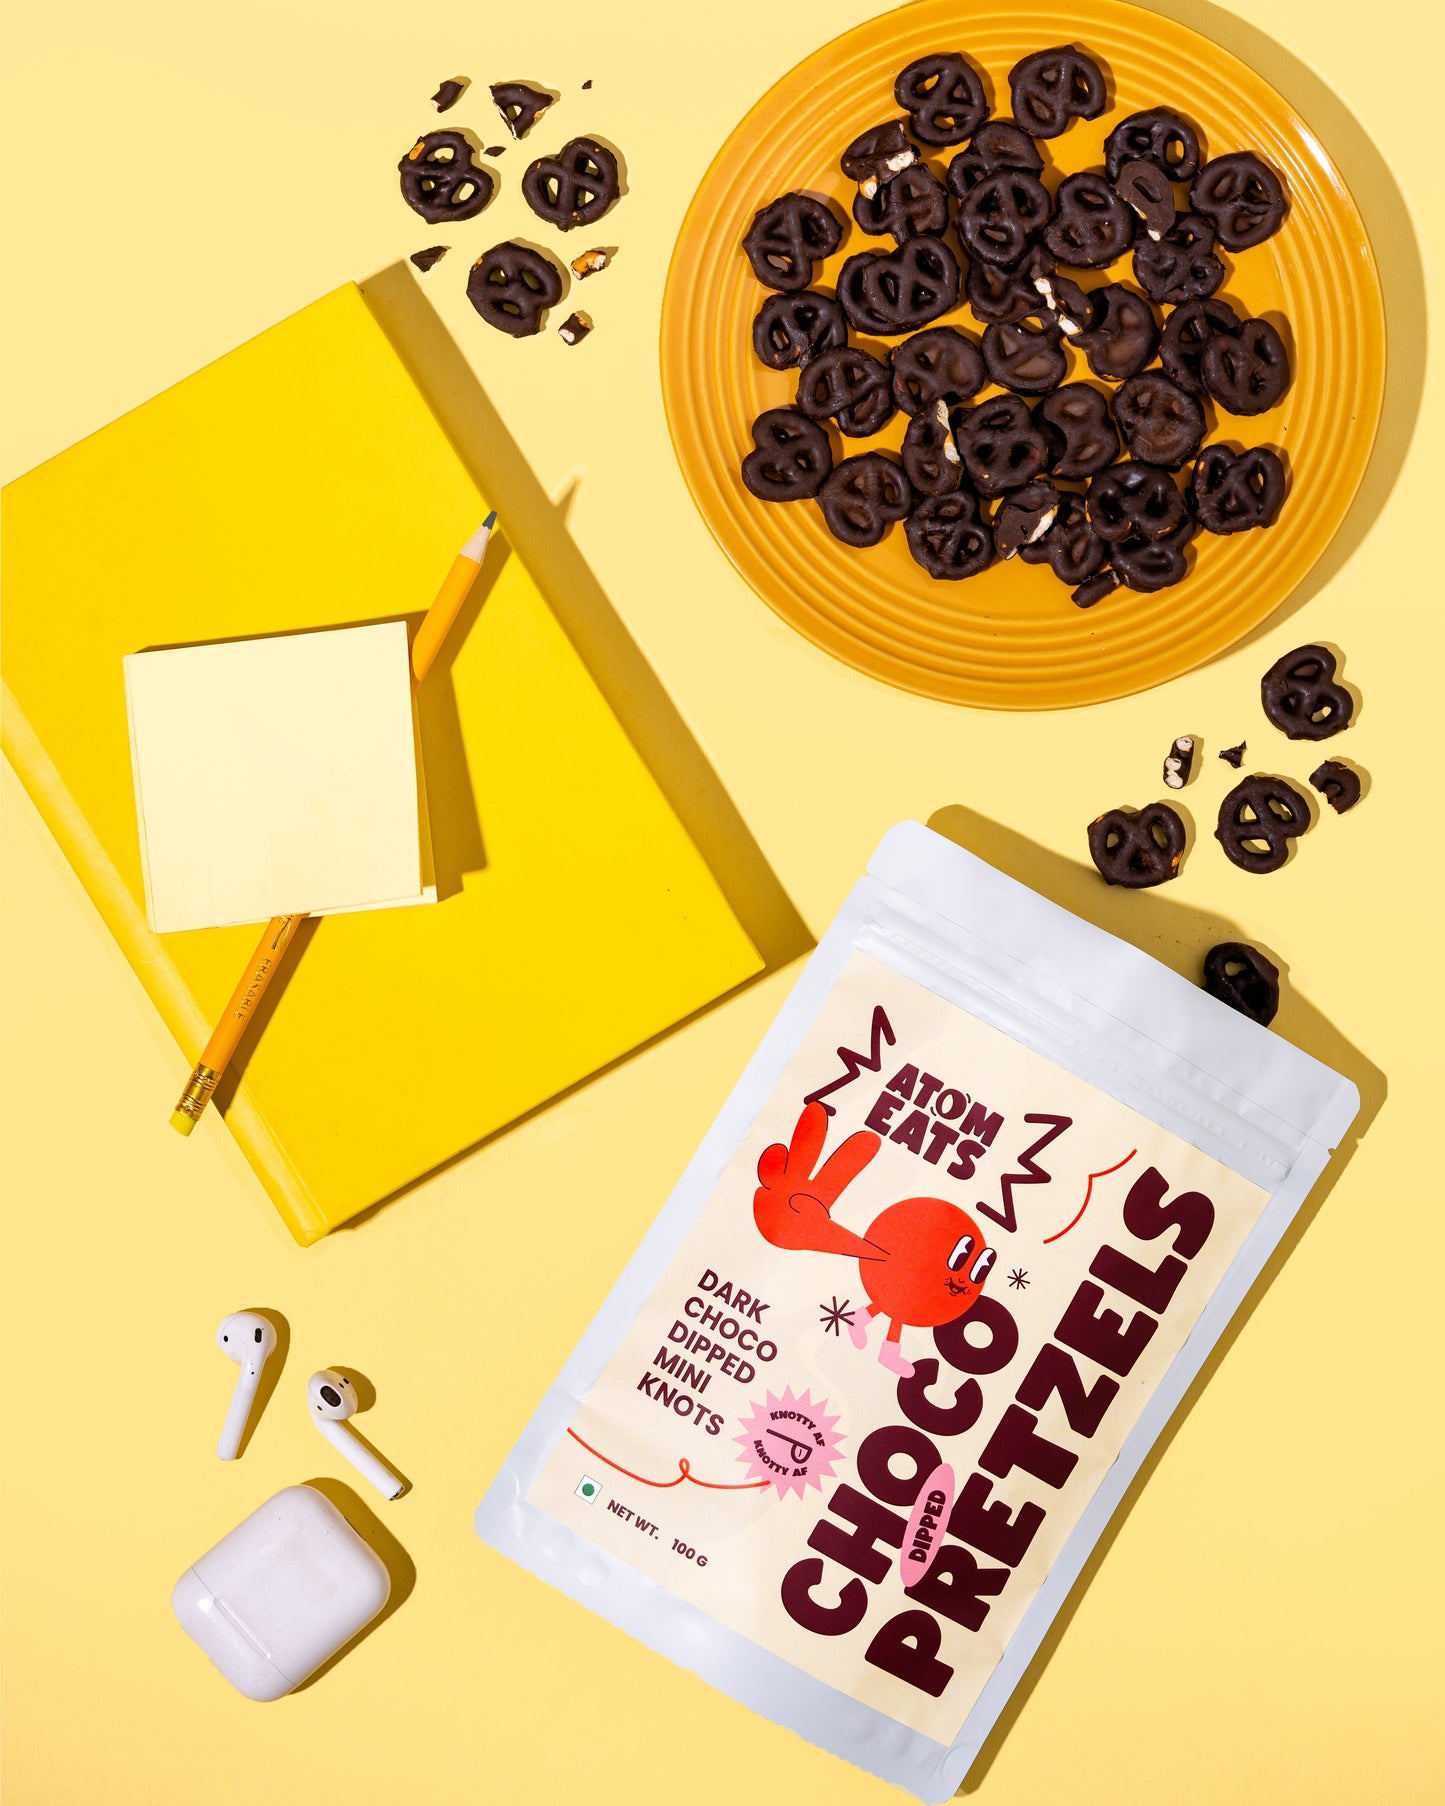 Dark Choco Dipped Pretzels: Choco Dipped Mini Salted Pretzel Knots | 100g Pack by Atom Eats